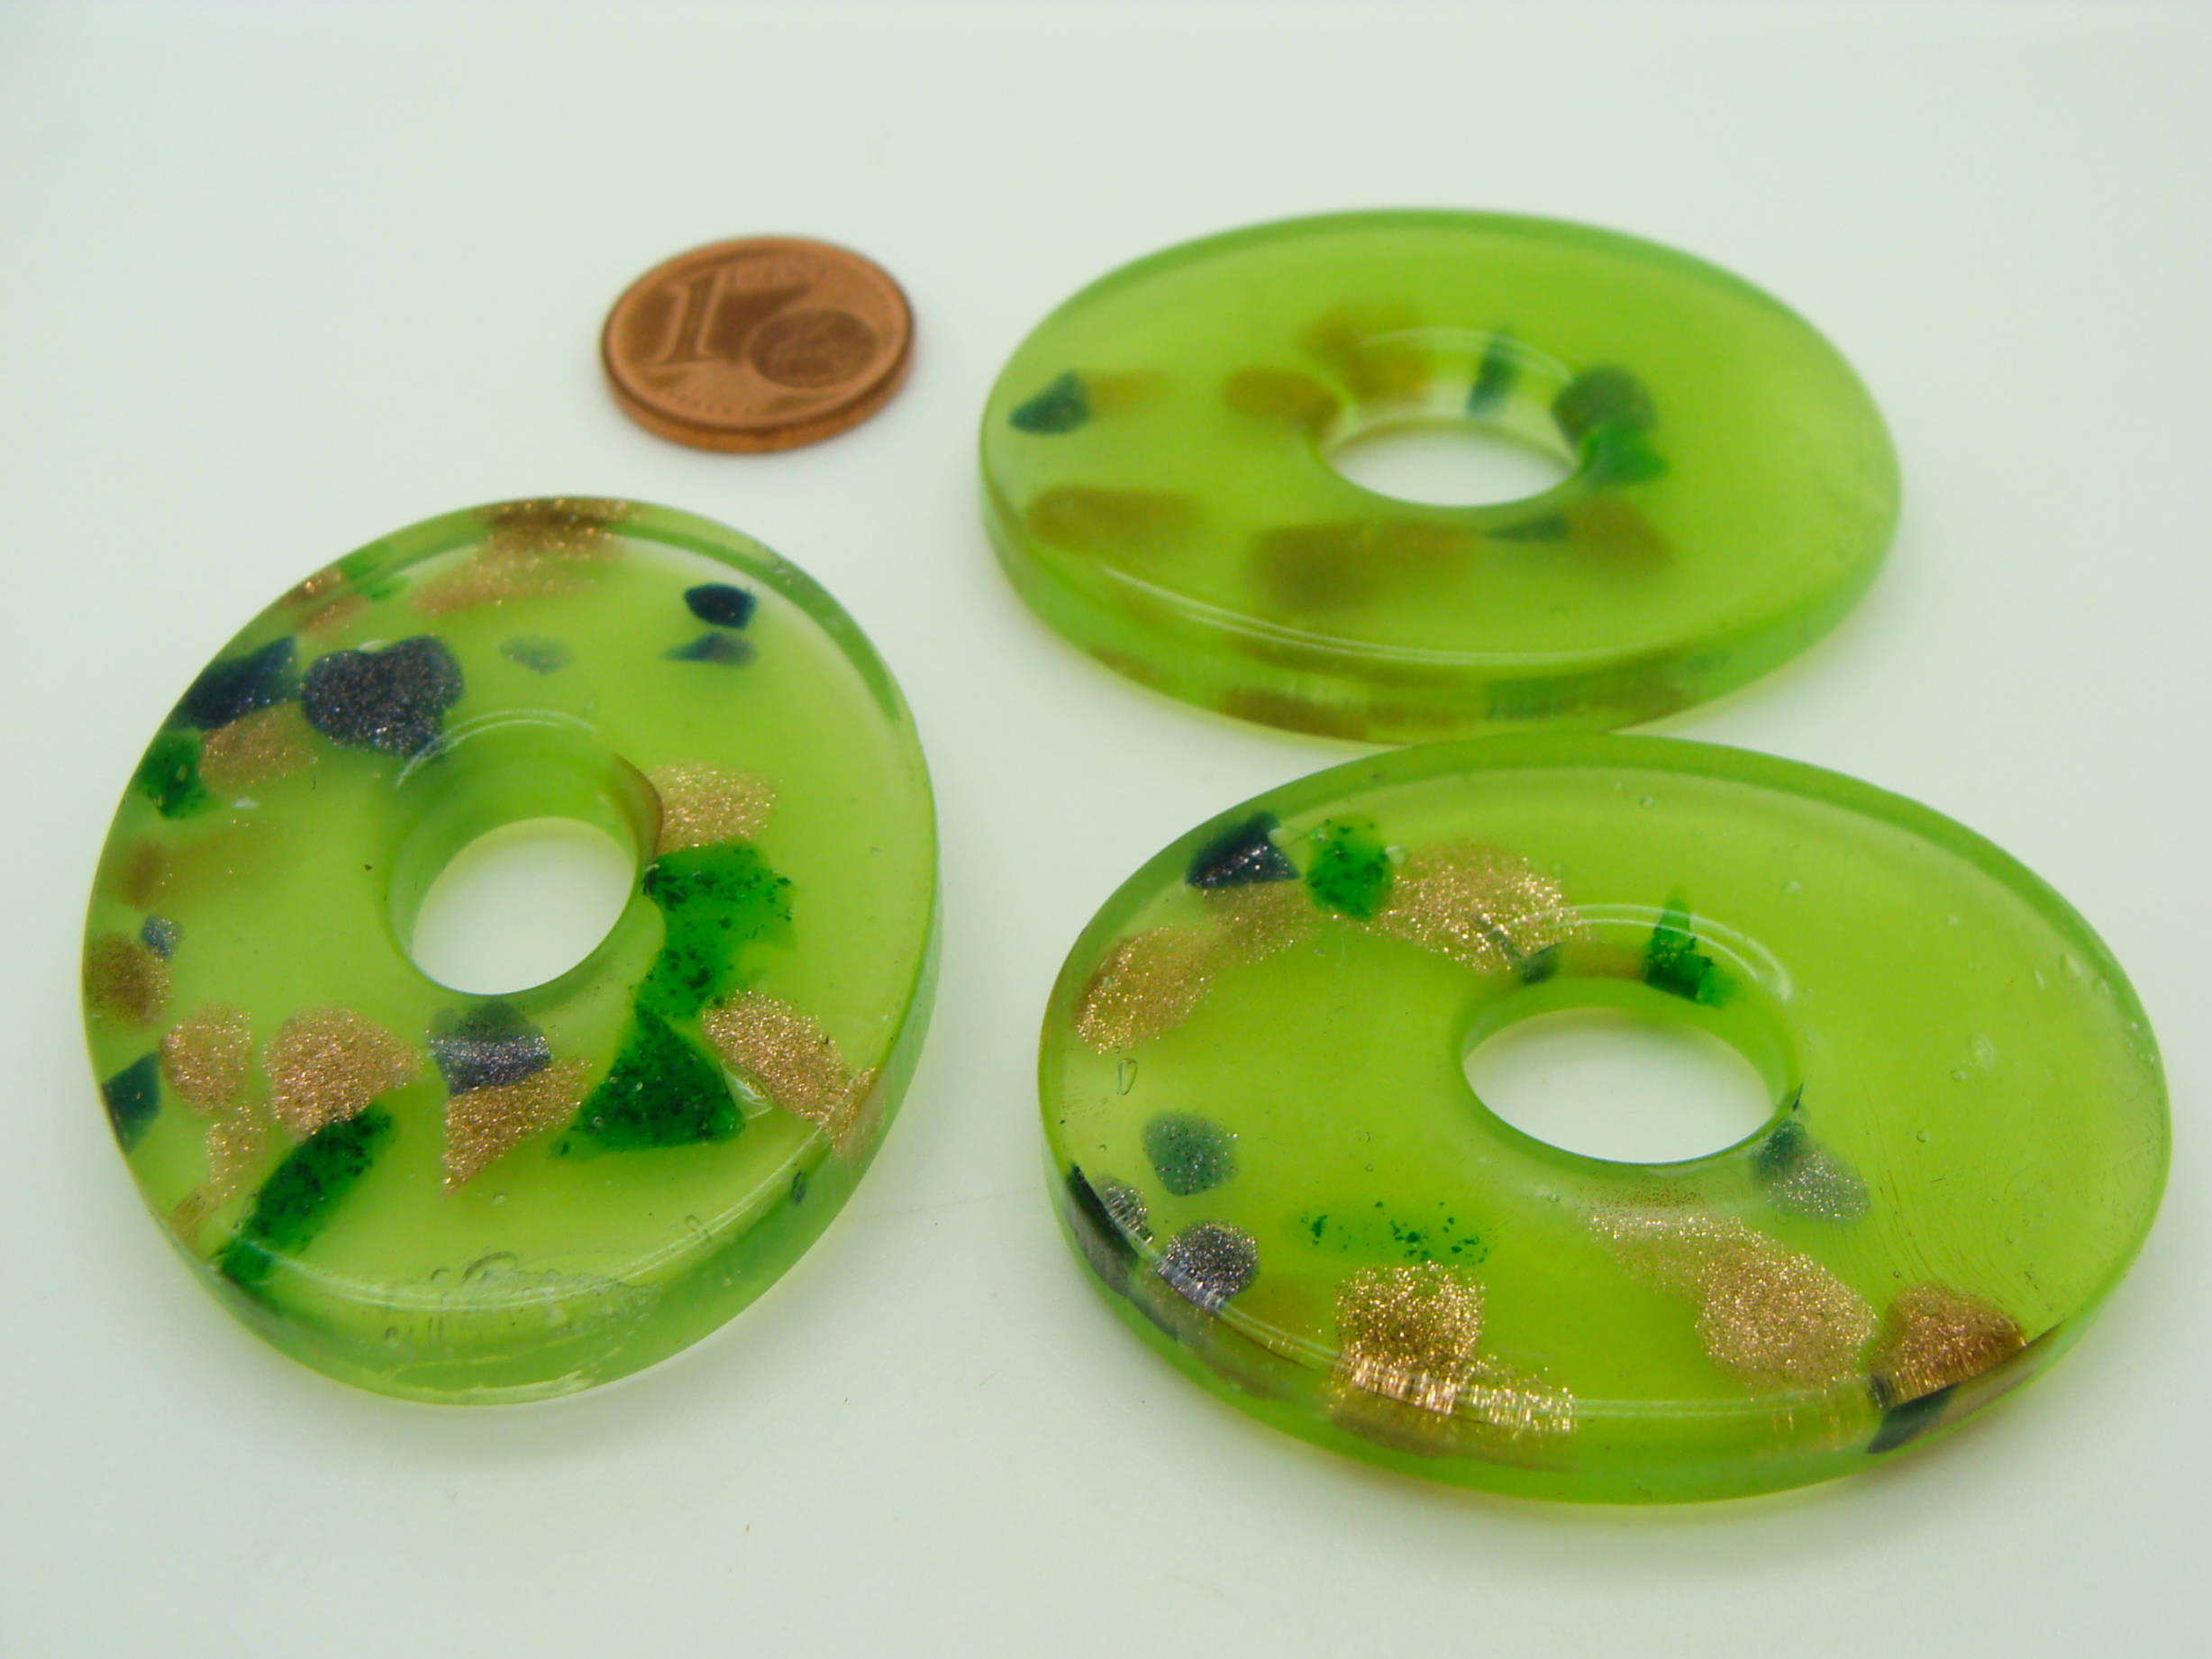 Pend-292-6 pendentif ovale verre plat vert